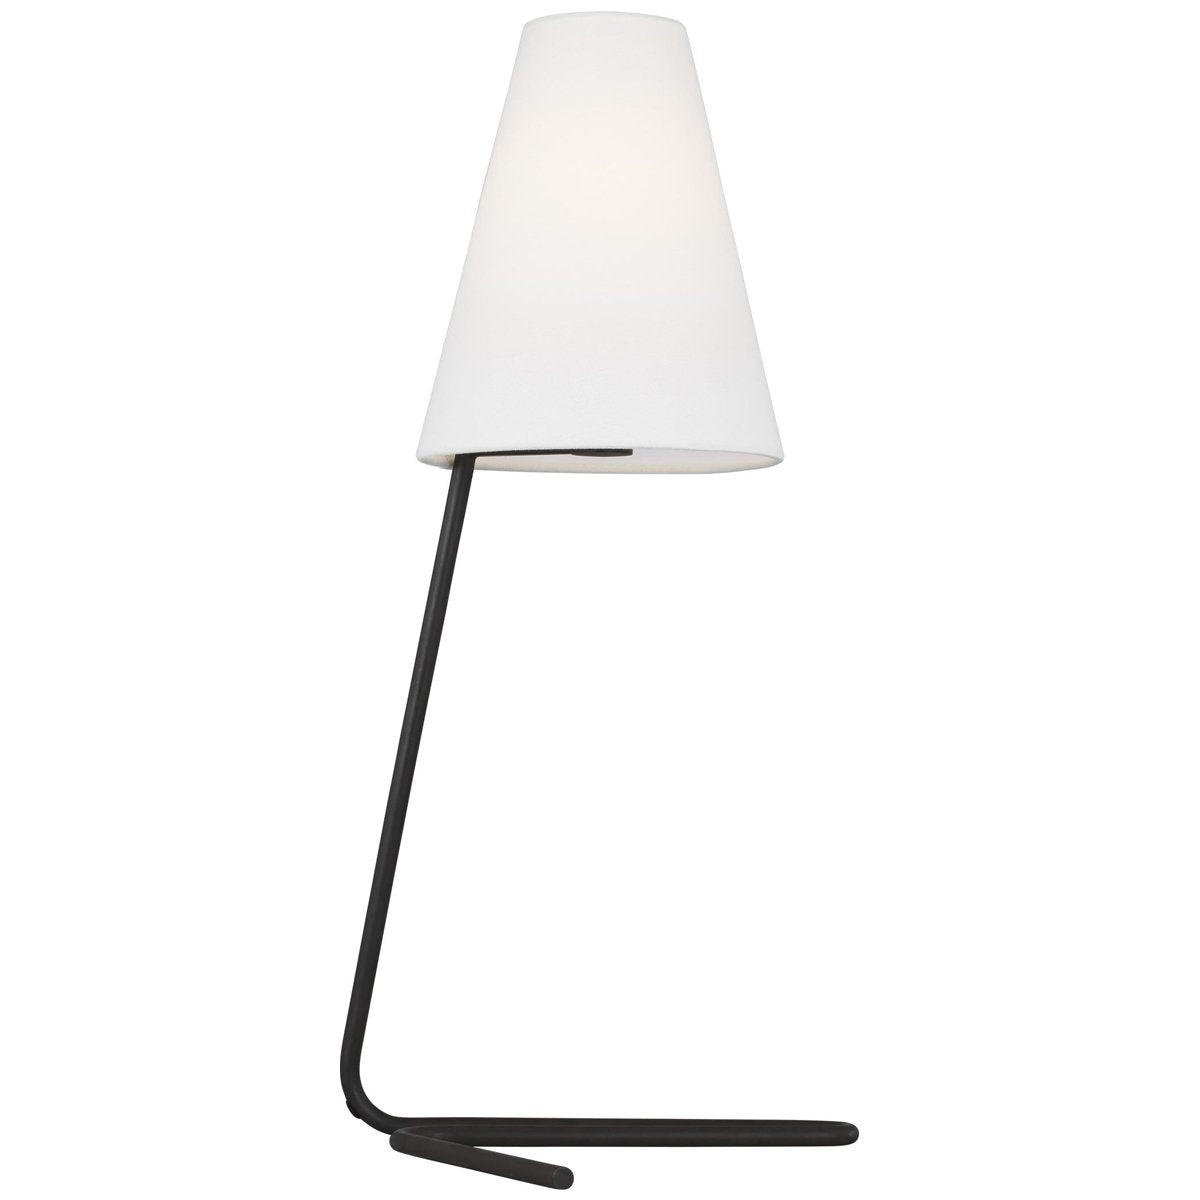 Feiss Jaxon Table Lamp